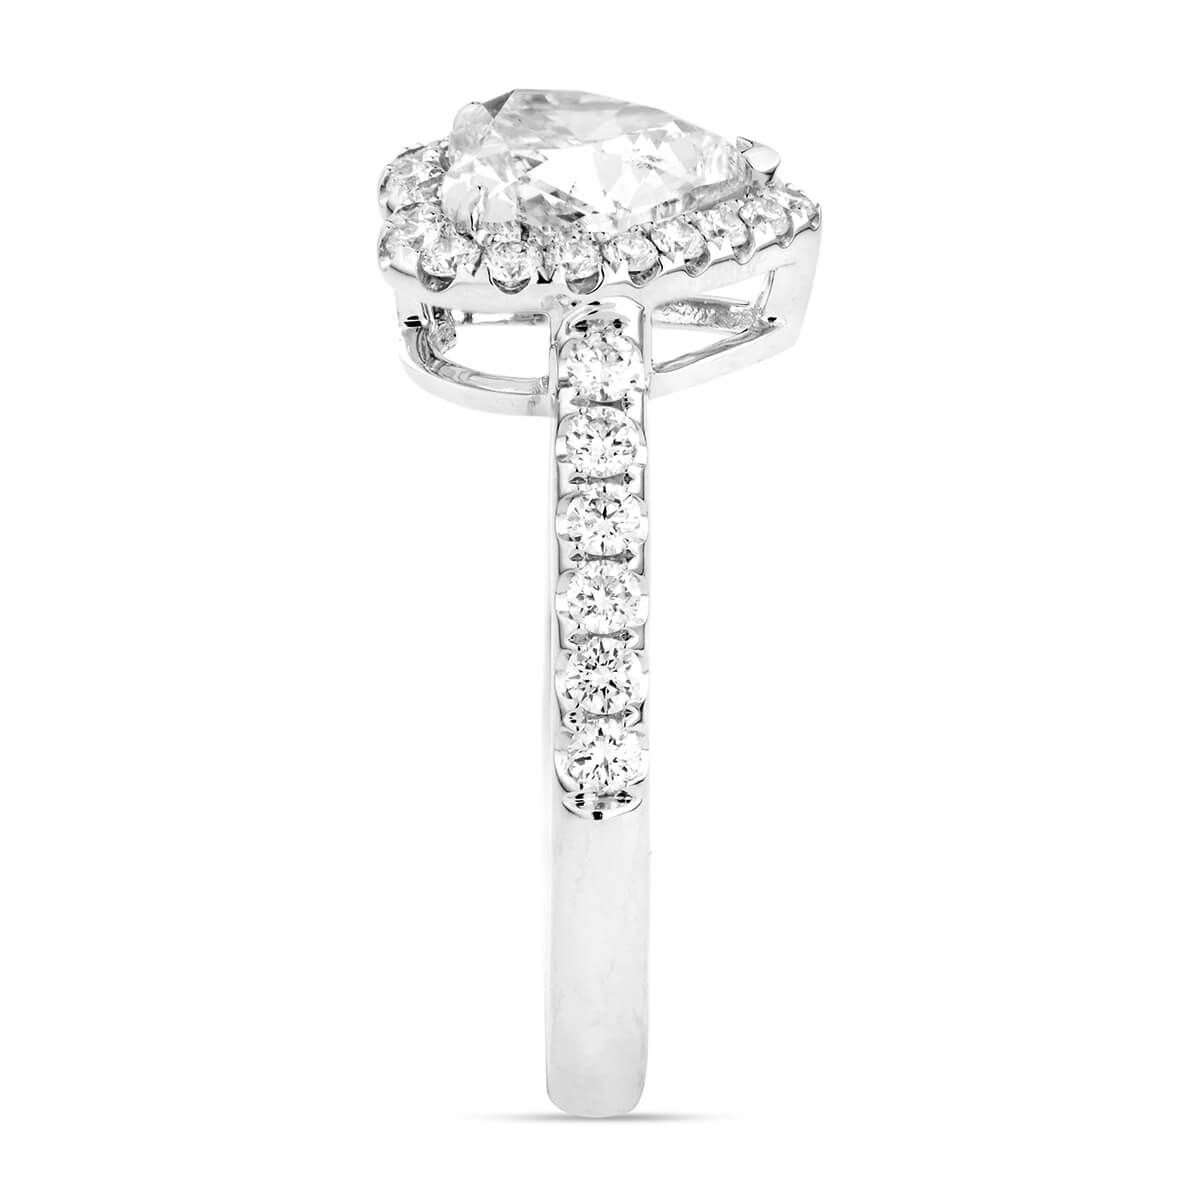  White Diamond Ring, 1.10 Ct. (1.47 Ct. TW), Heart shape, GIA Certified, 2277574805